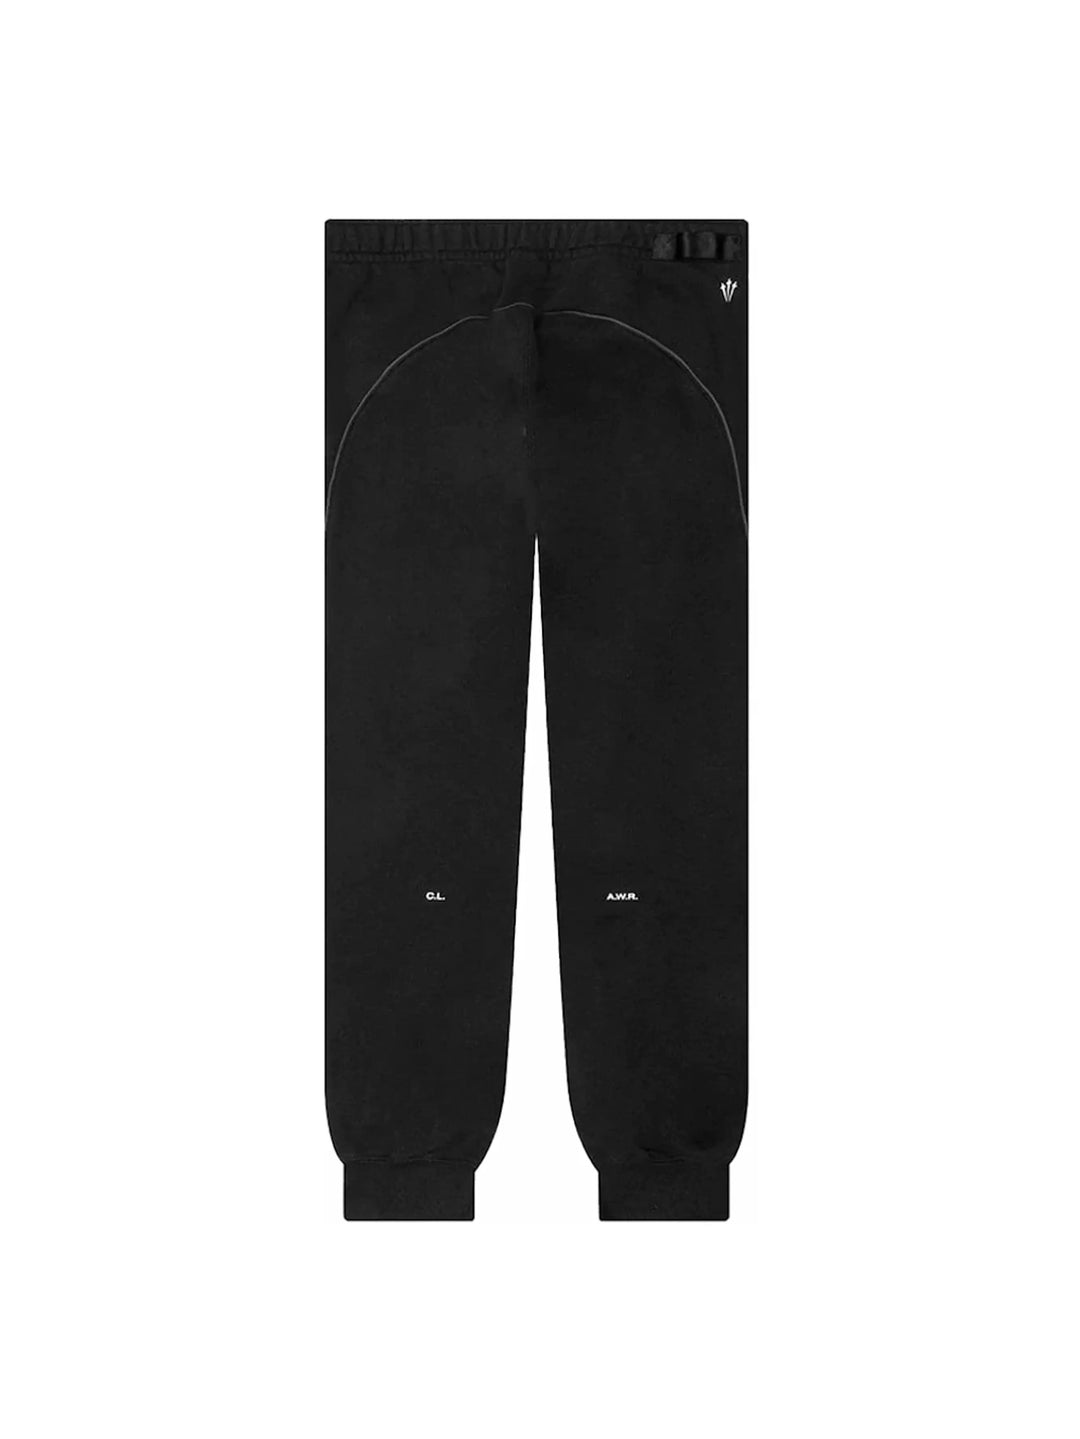 Nike x NOCTA Fleece CS Sweatpant Black in Melbourne, Australia - Prior